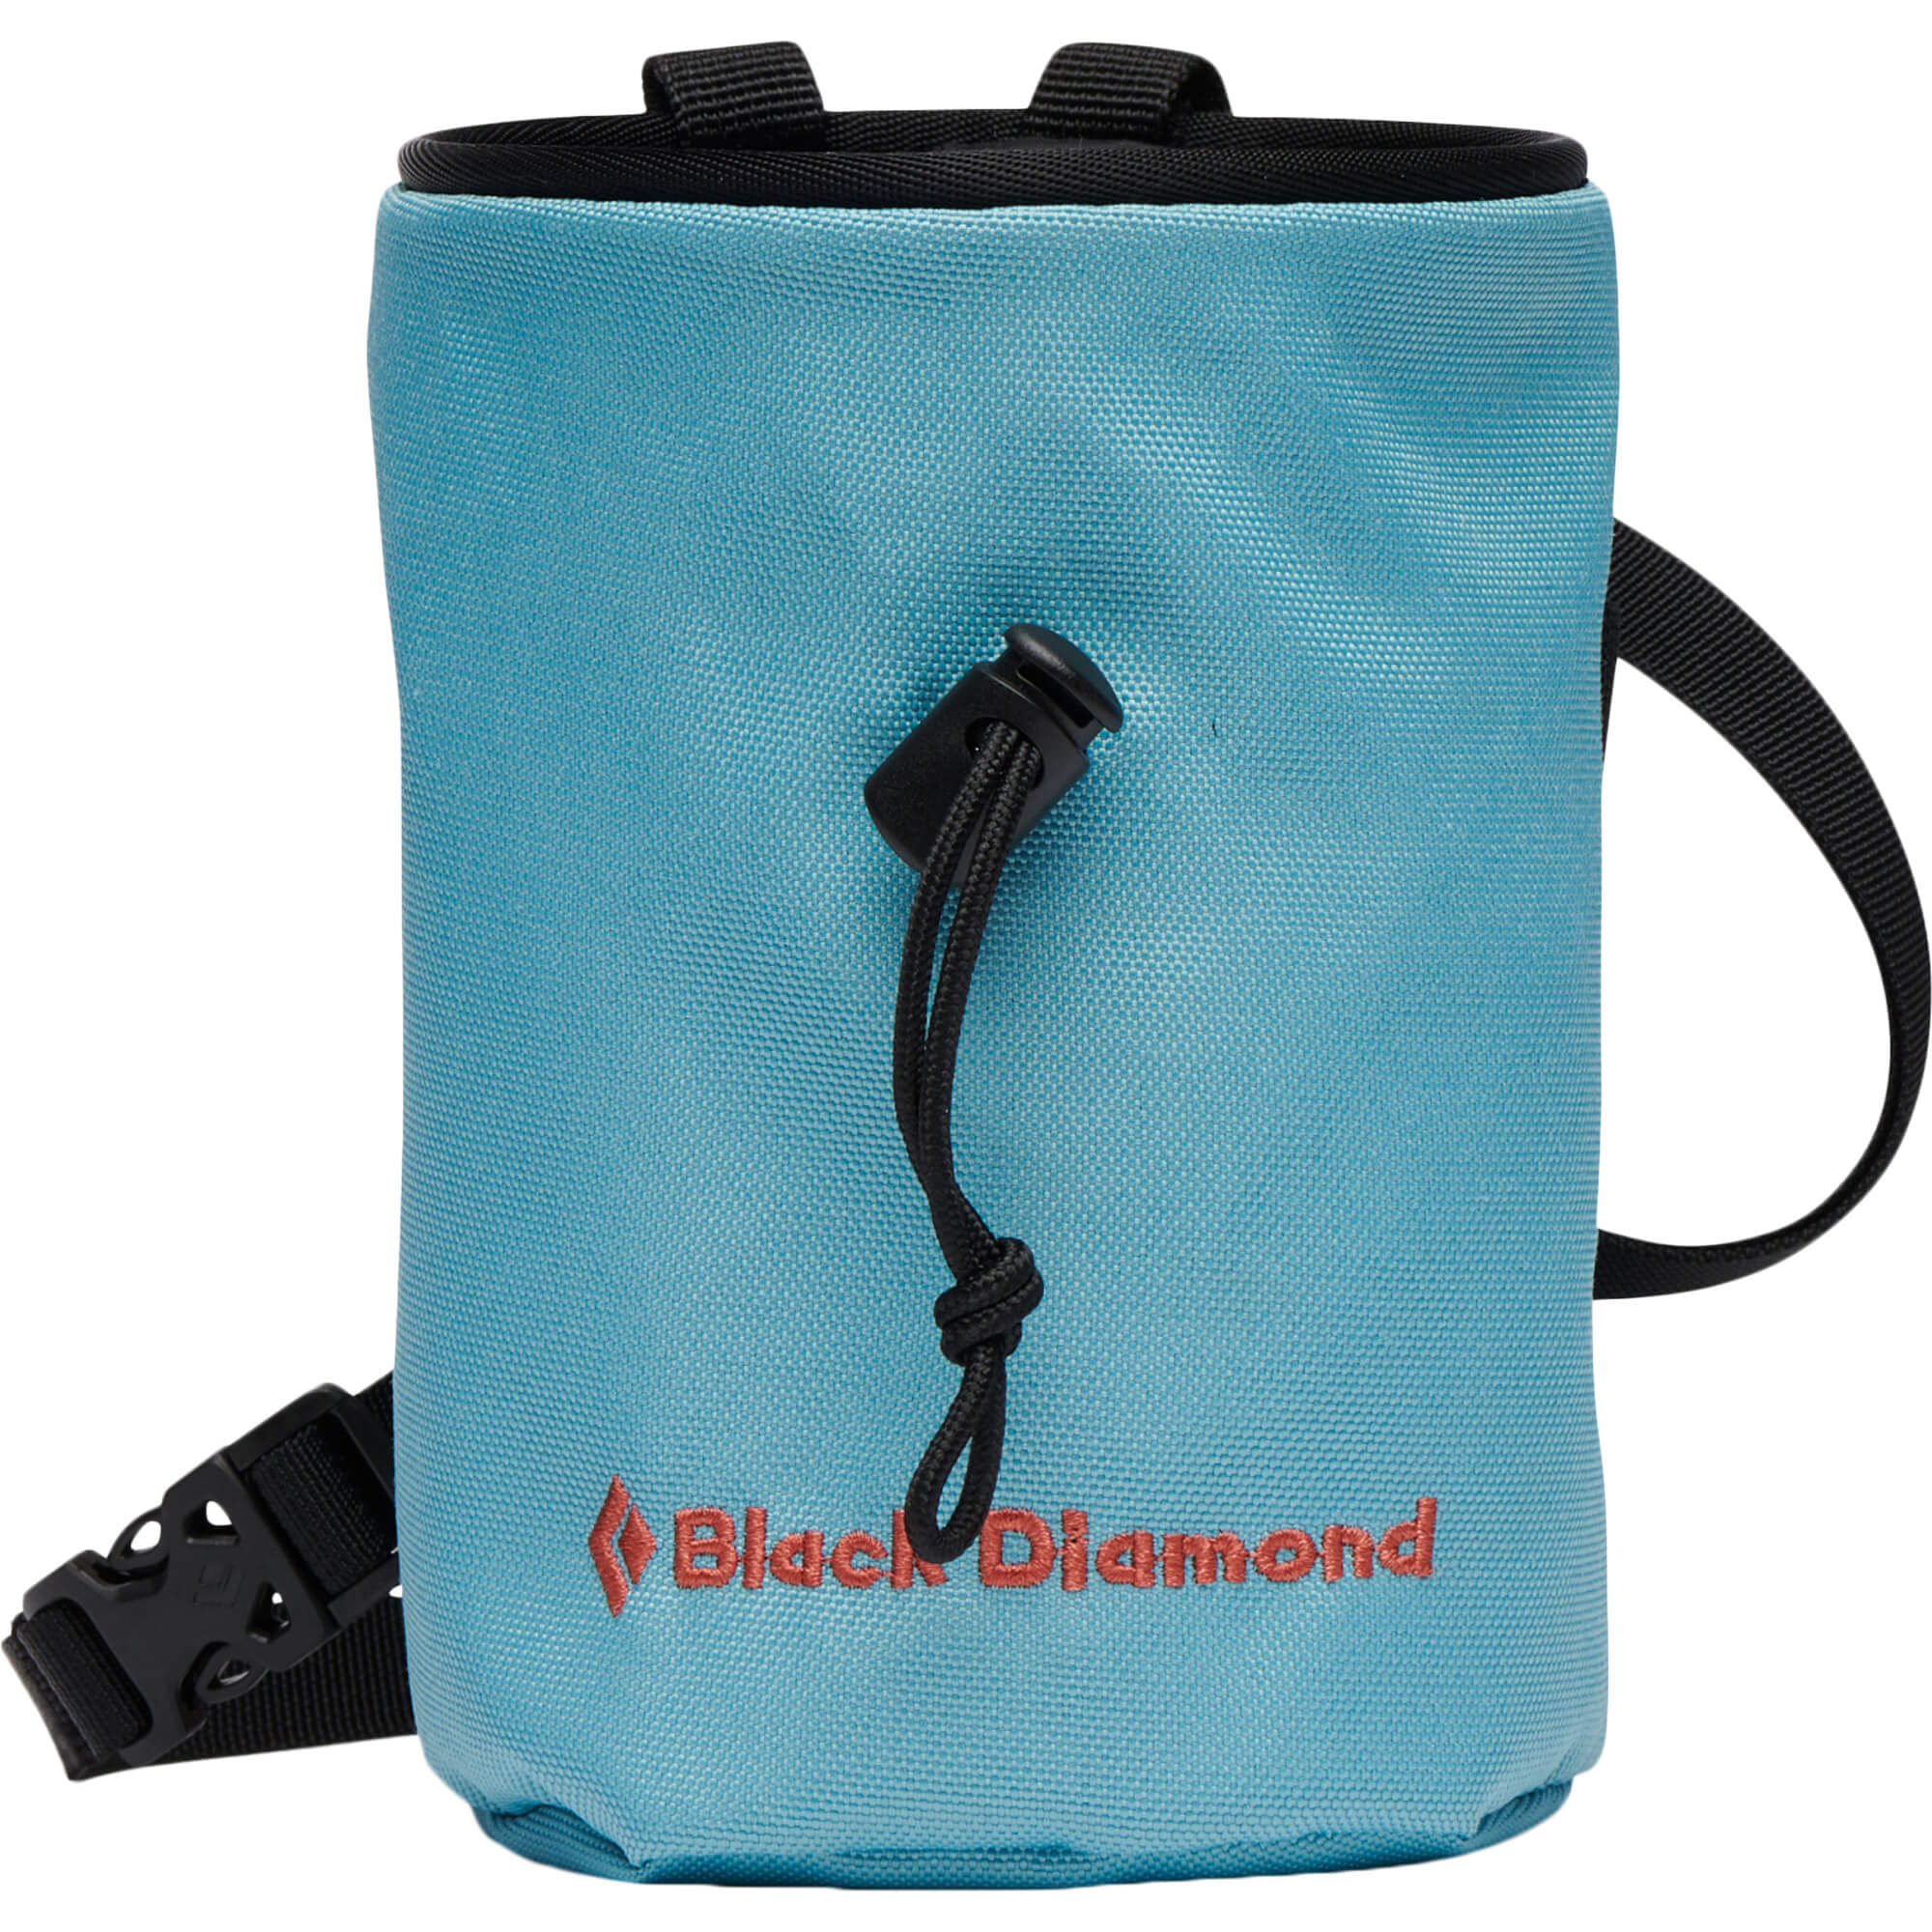 Black Diamond Momentum  Rock Climbing Harness Package